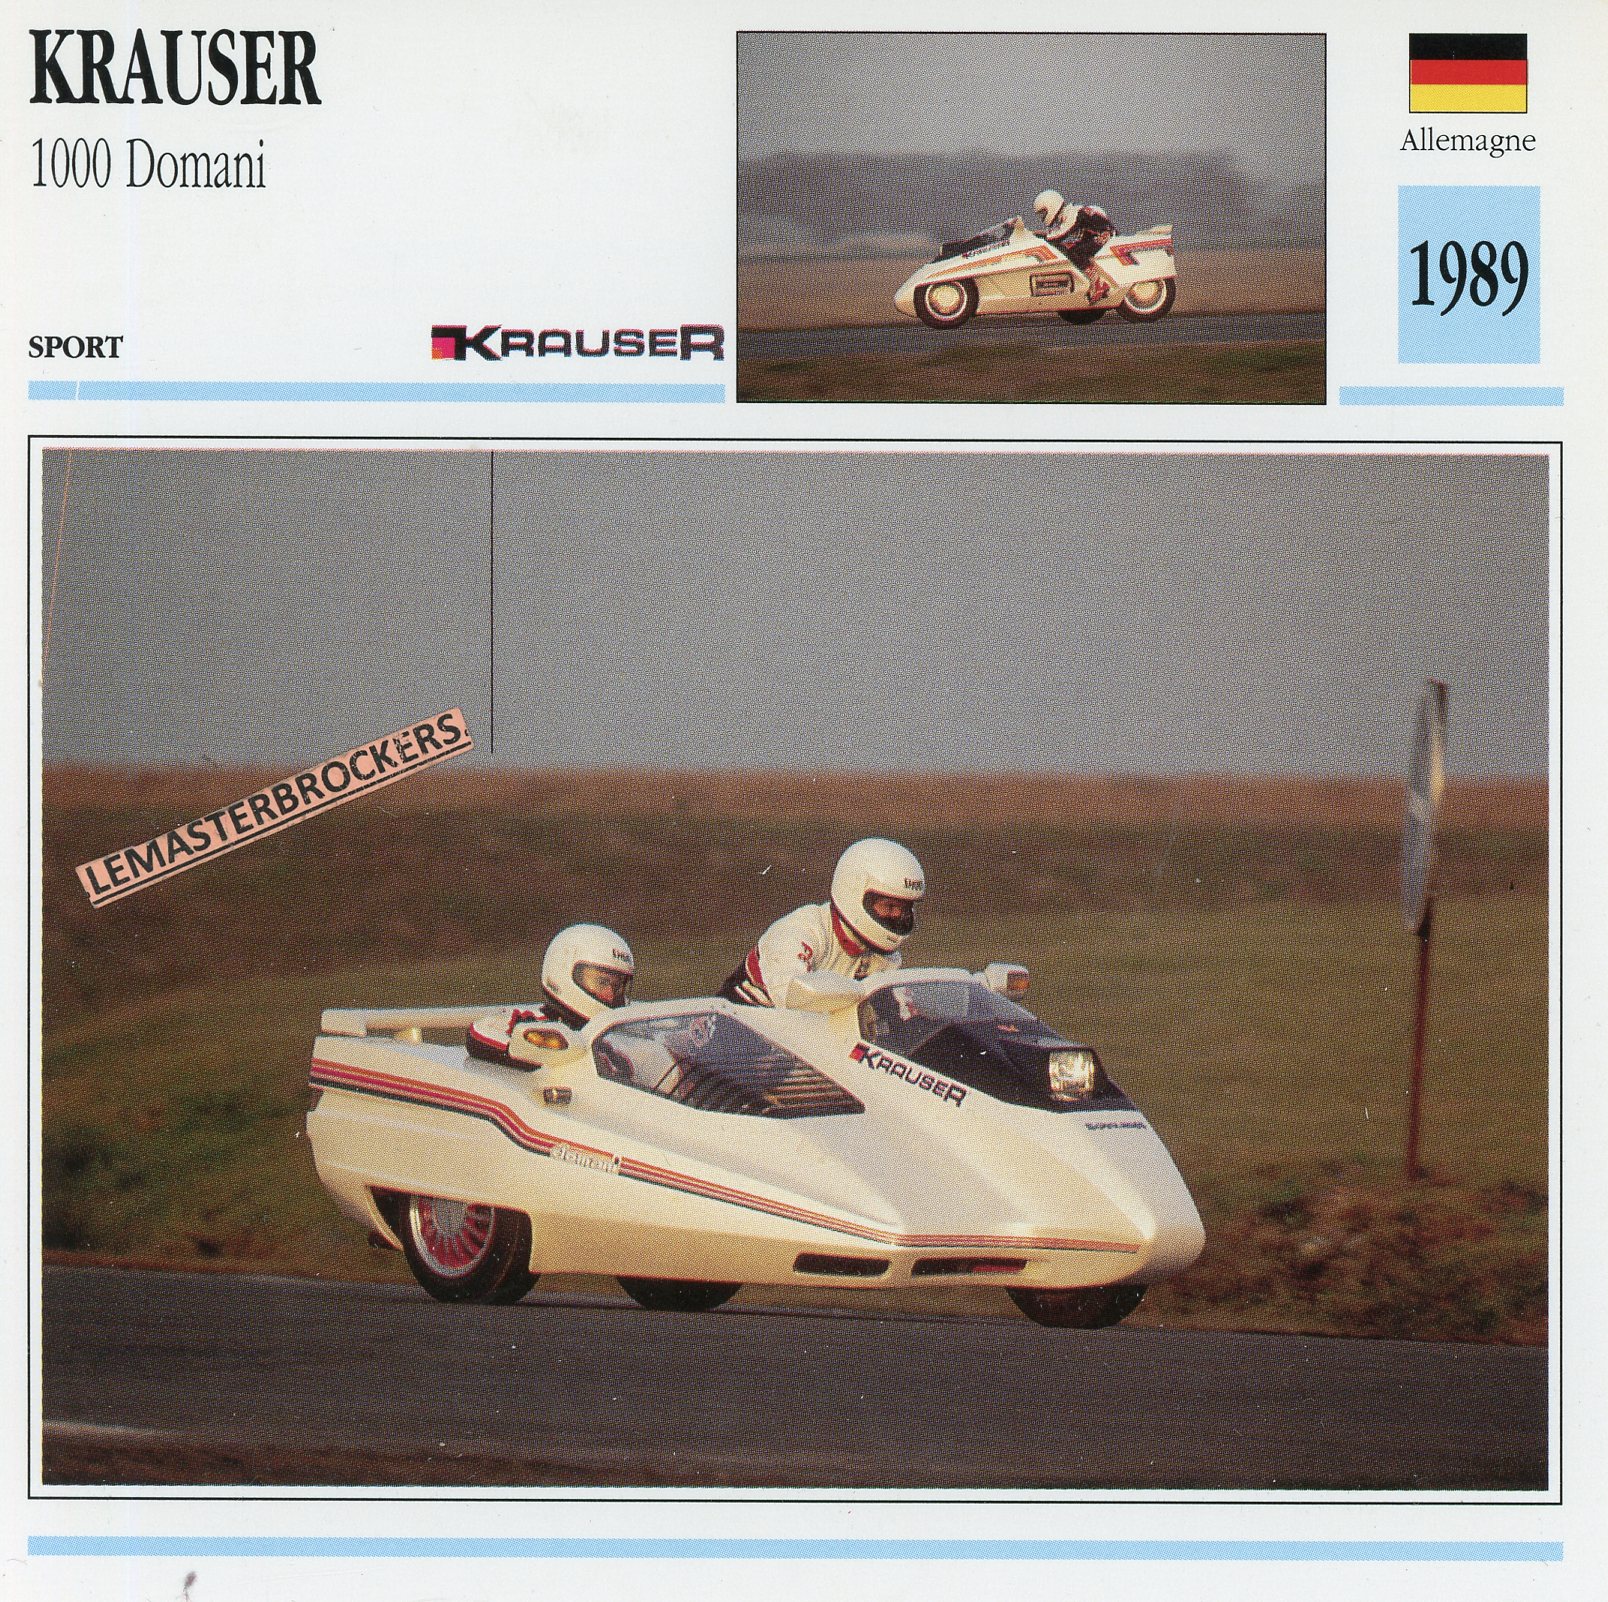 KRAUSER-1000-DOMANI-1989-FICHE-MOTO-SIDE-CAR-LEMASTERBROCKERS